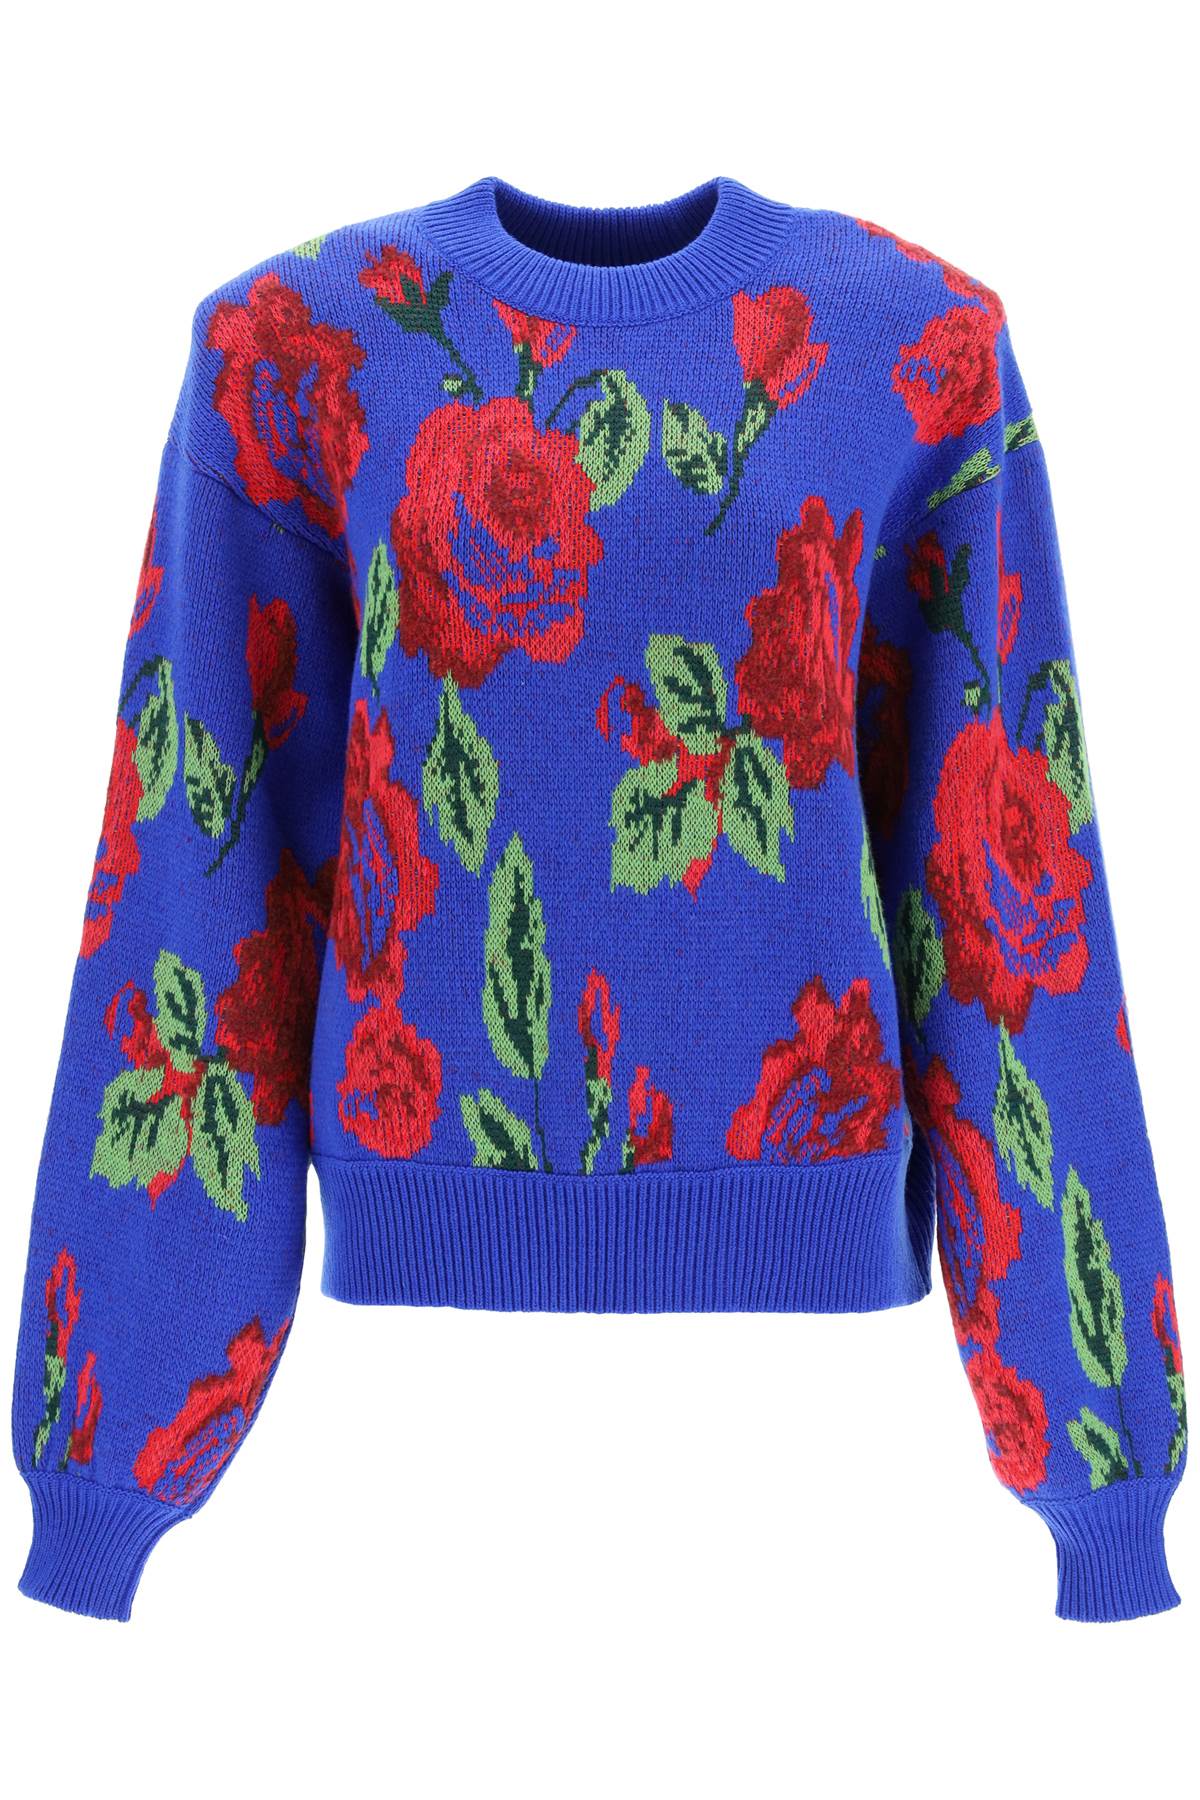 Magda Butrym Floral Jacquard Knit Sweater